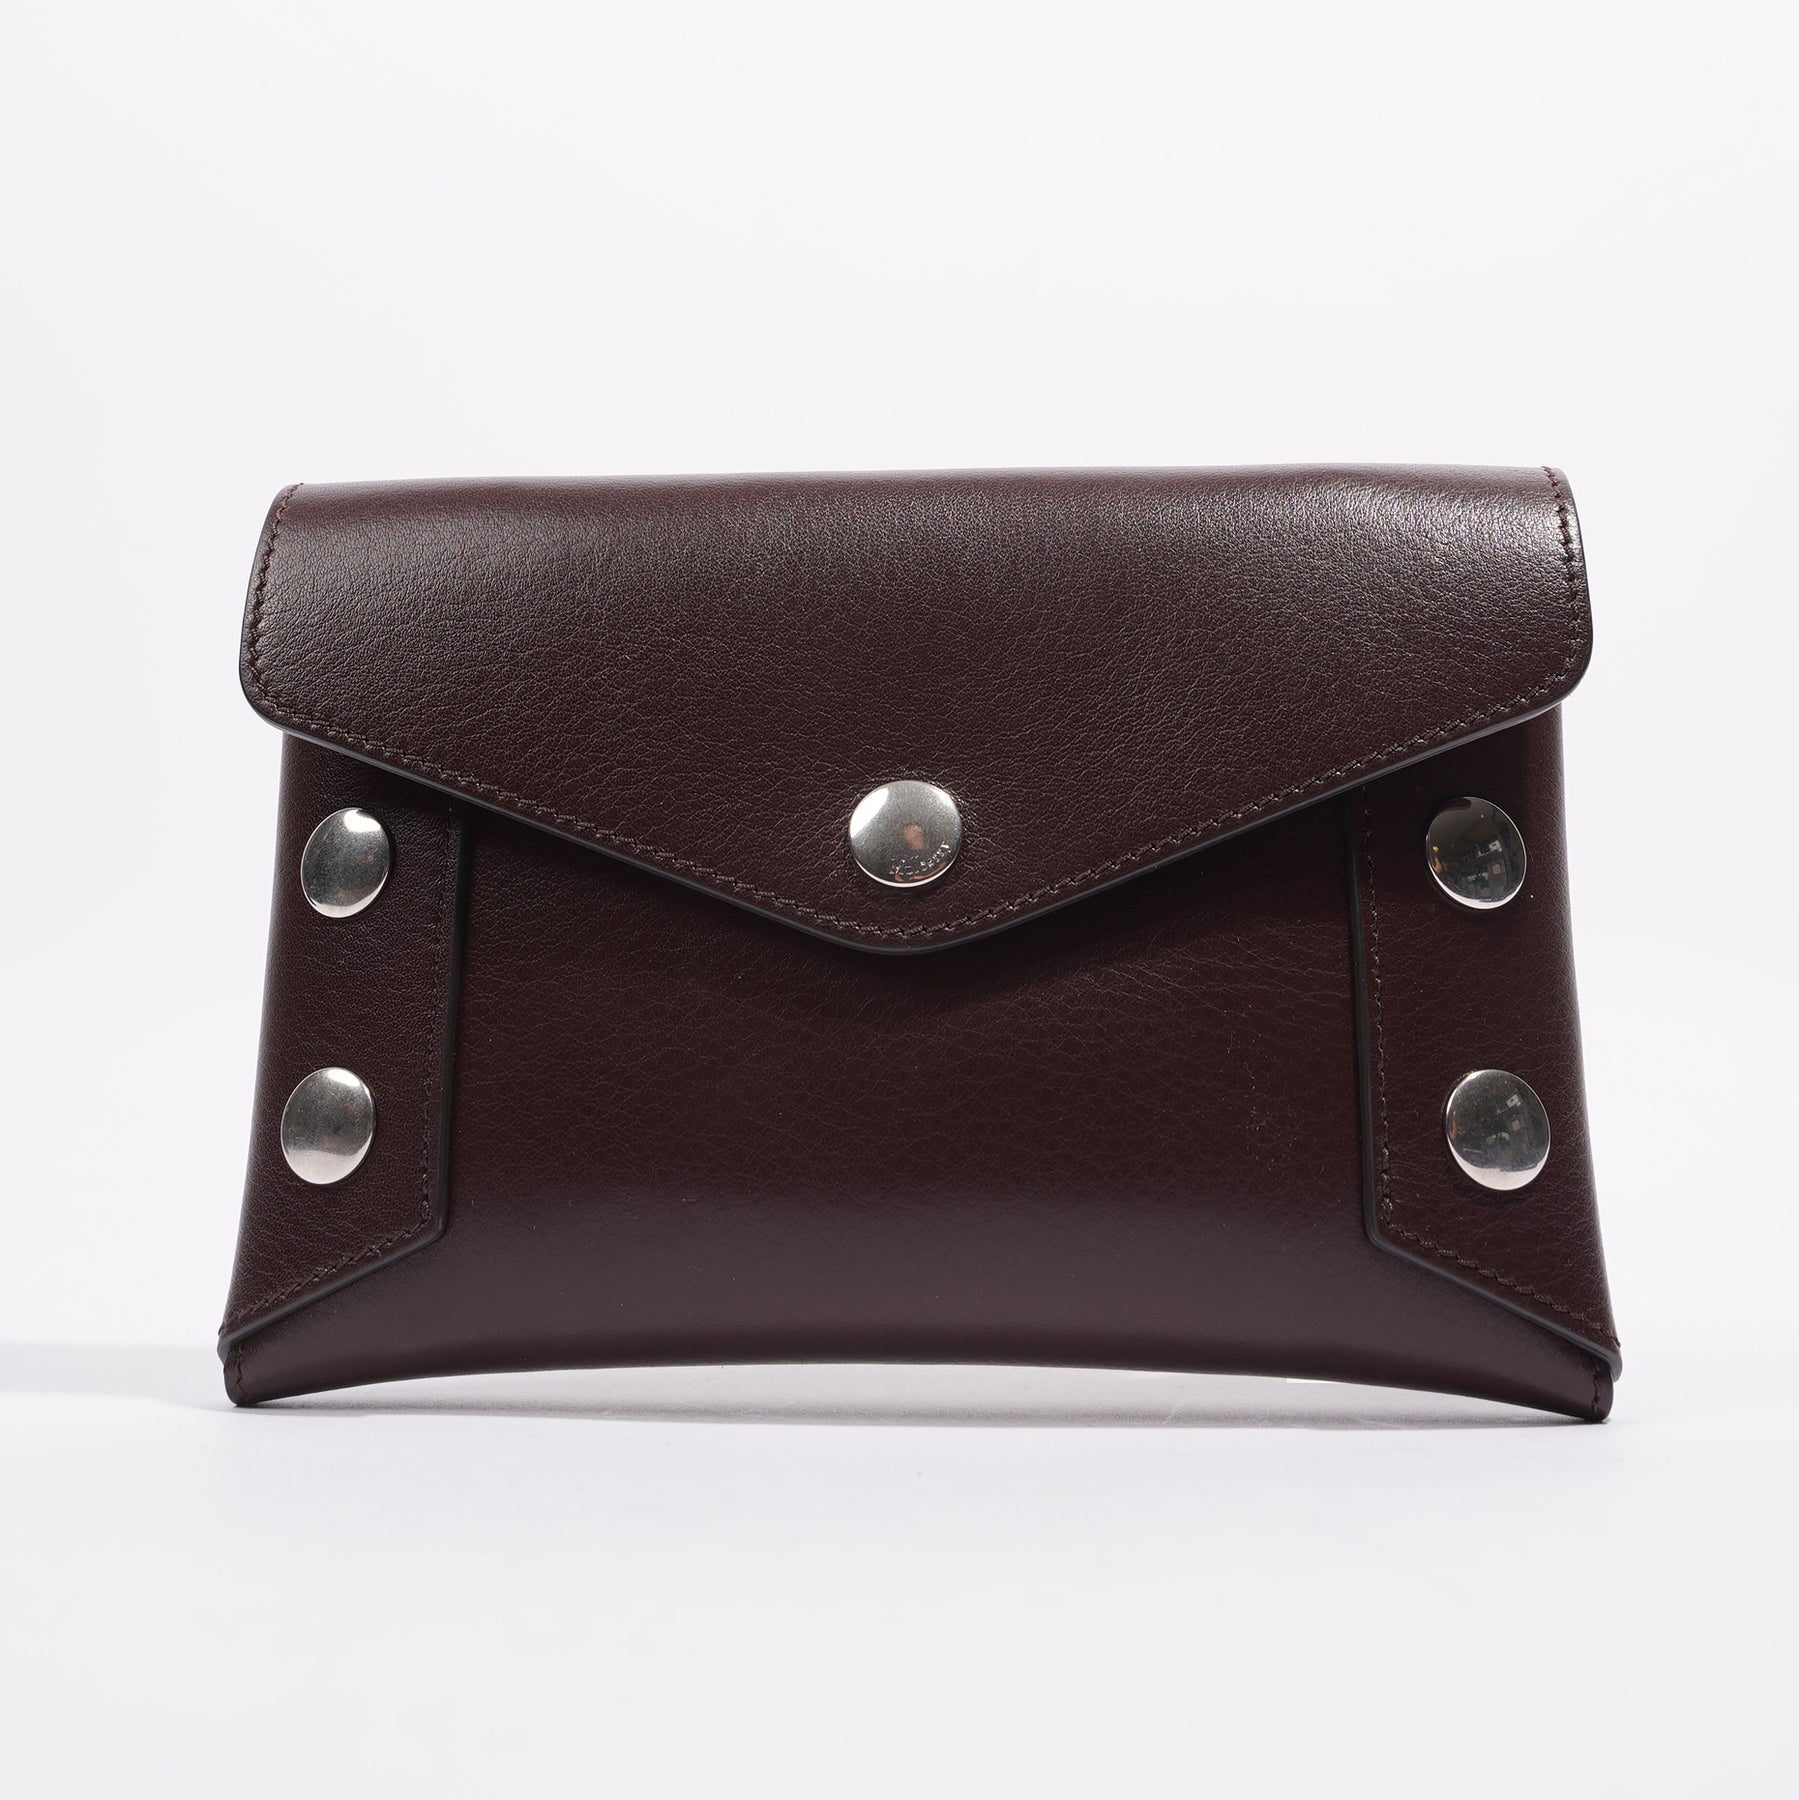 Alexander Wang Mini Studded Burgundy Leather Envelope Crossbody Bag Wallet  NEW